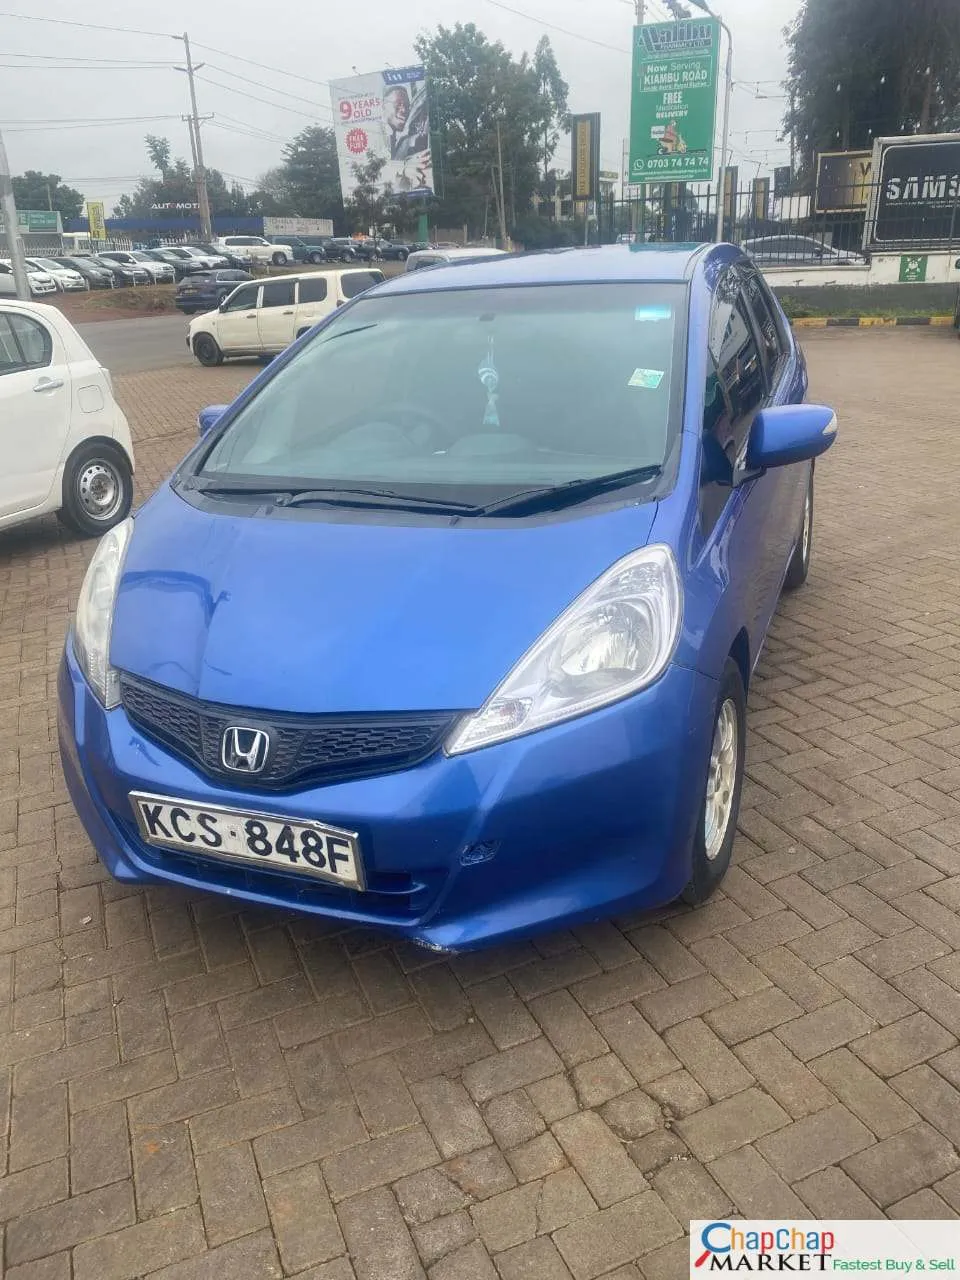 Honda fit hybrid for sale in Kenya You Pay 30% Deposit Trade in OK EXCLUSIVE